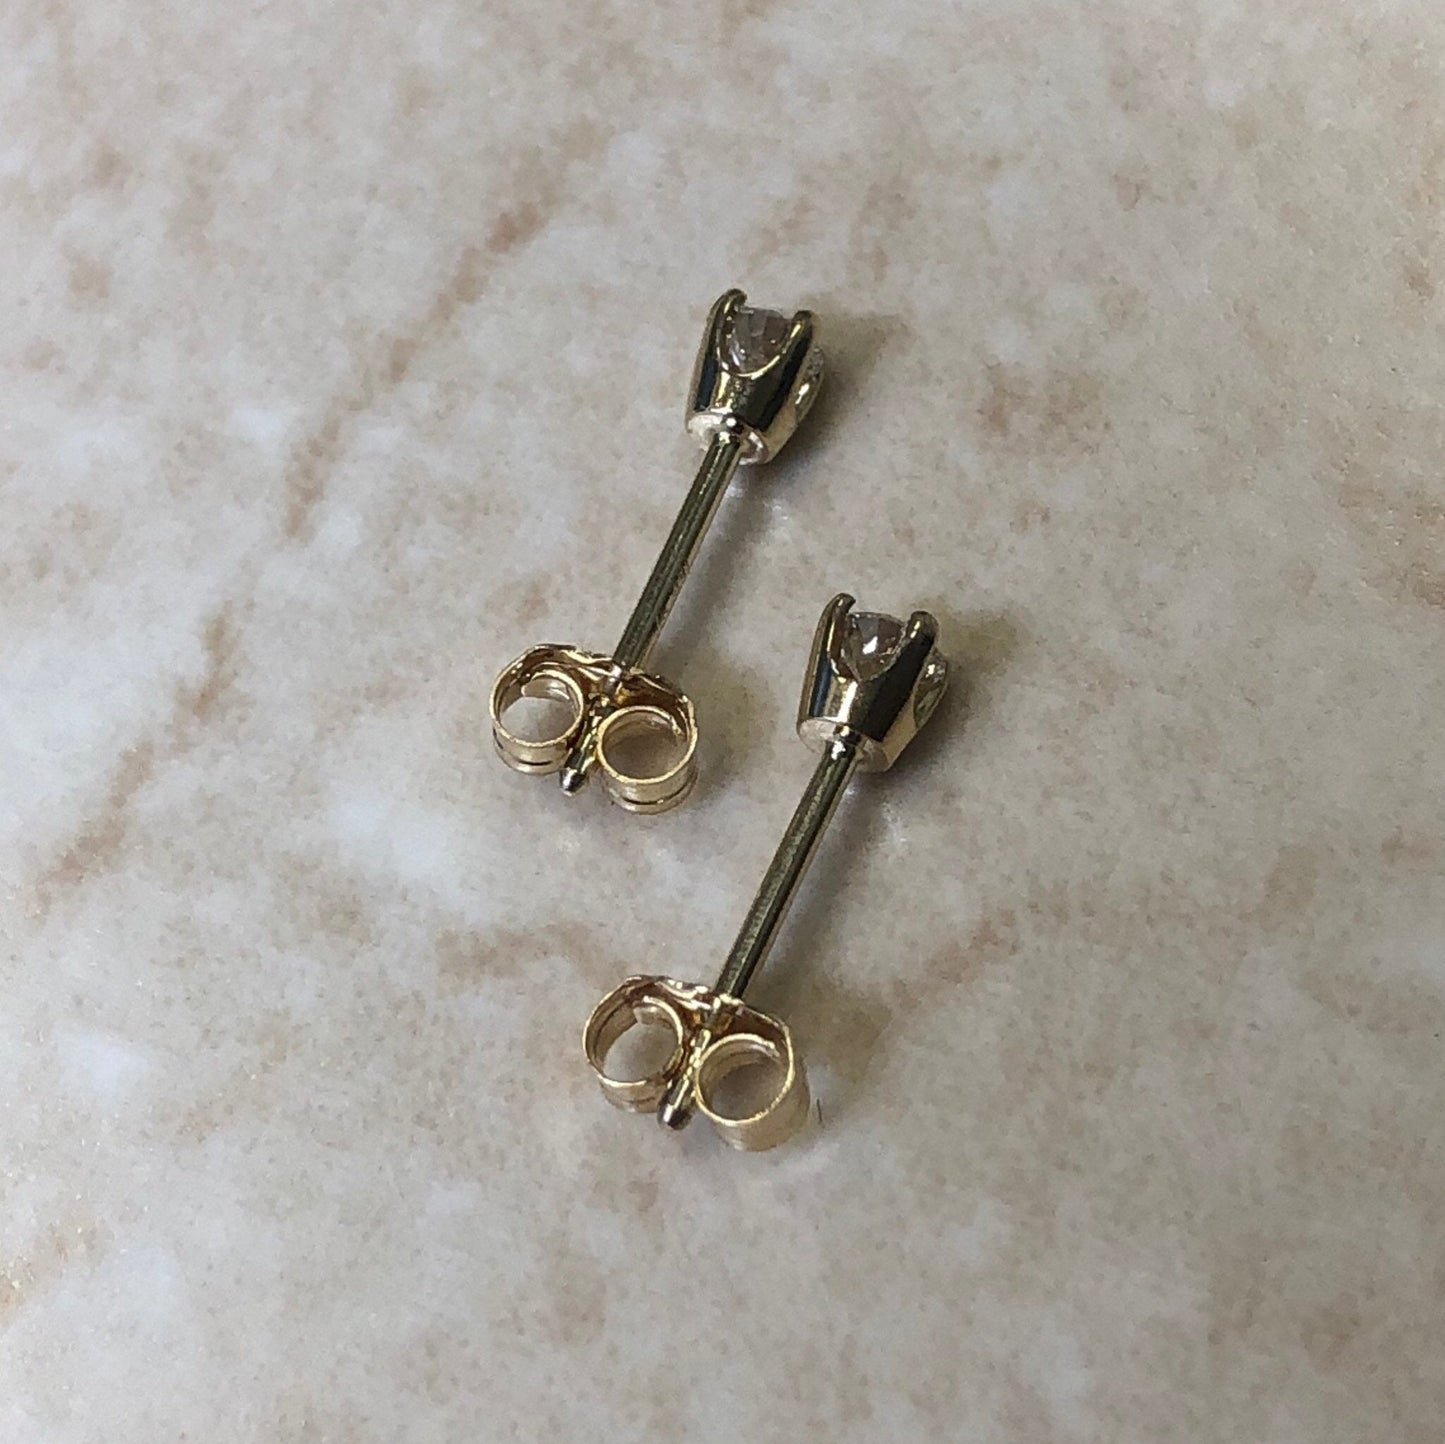 14 Karat Yellow Gold 0.15 CTTW Natural Diamond Stud Earrings With Push Backs - Birthday Gift